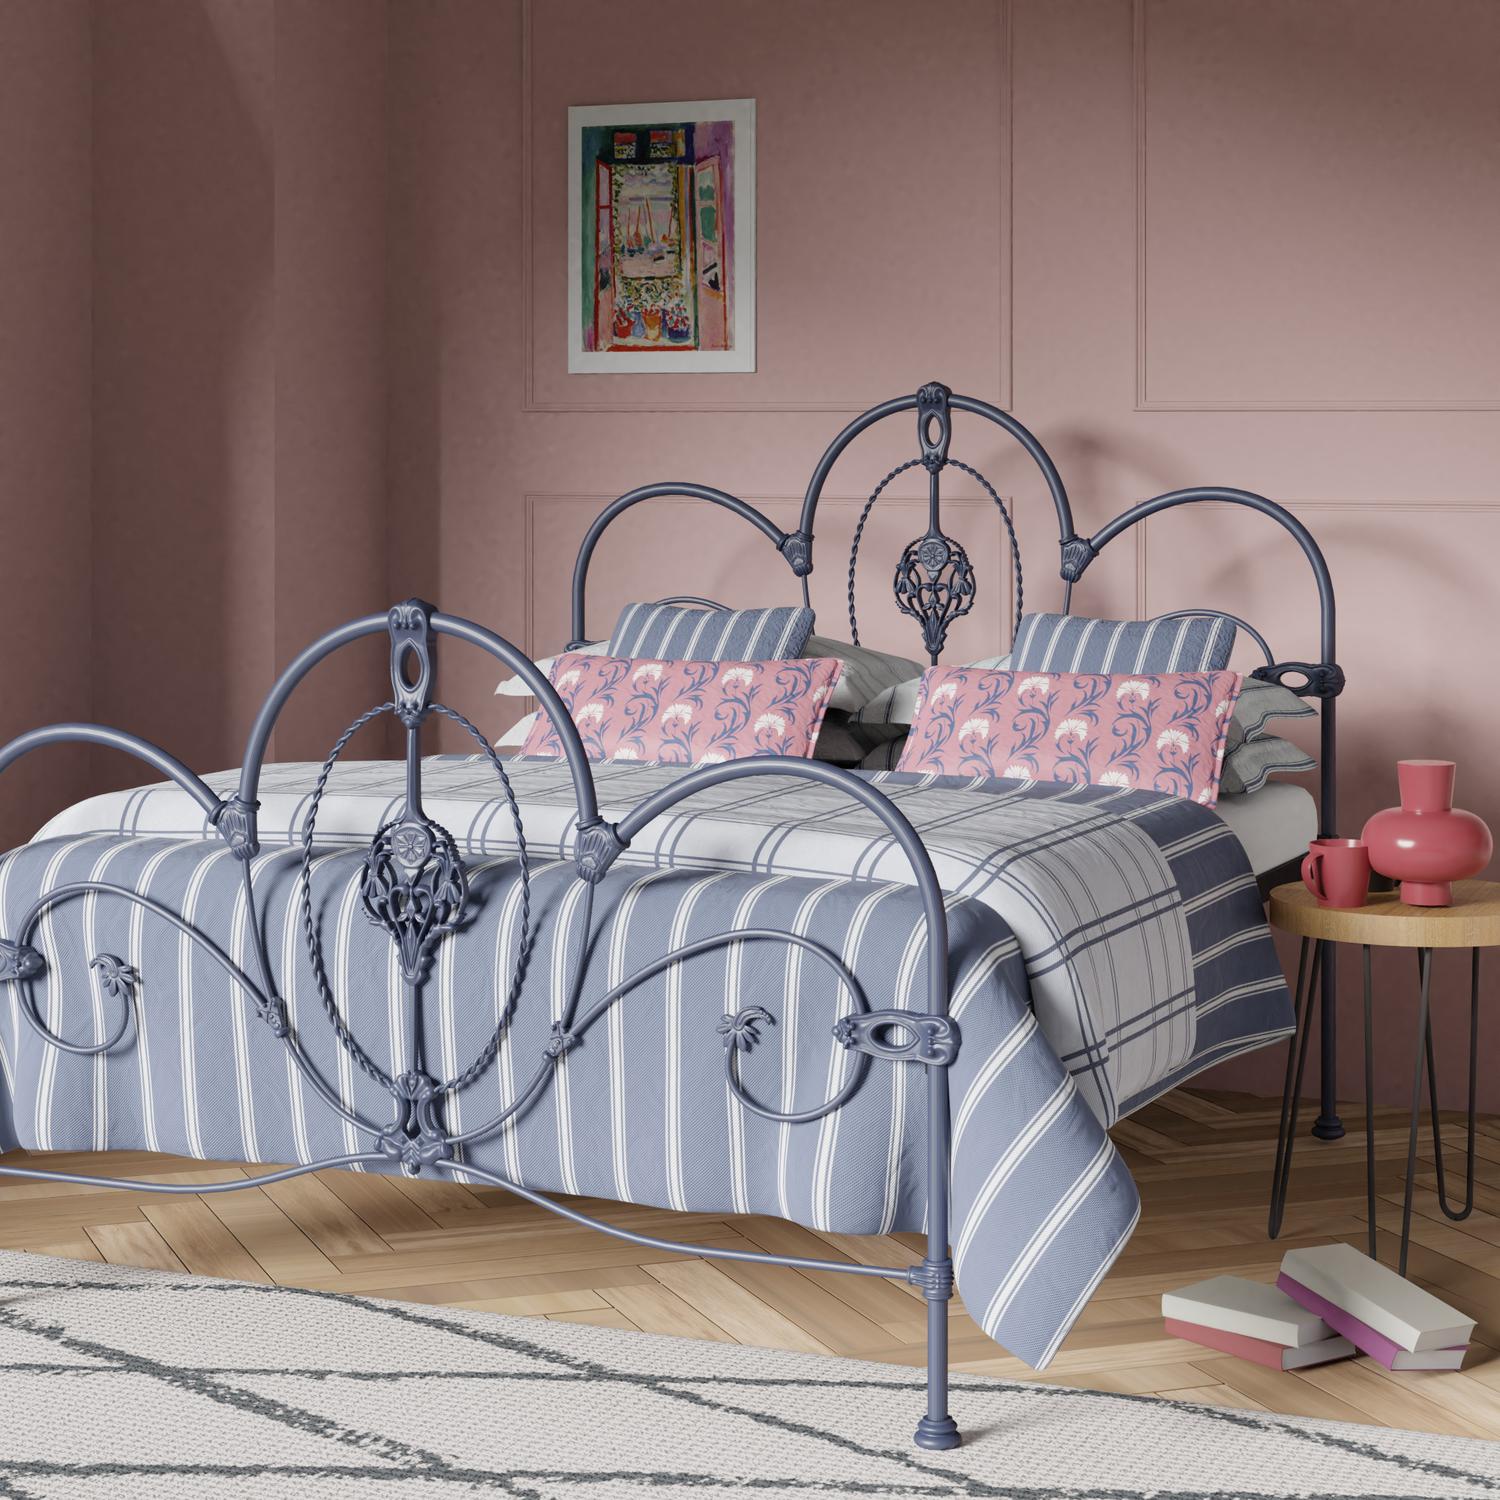 Ballina iron bed frame - Image blue pink